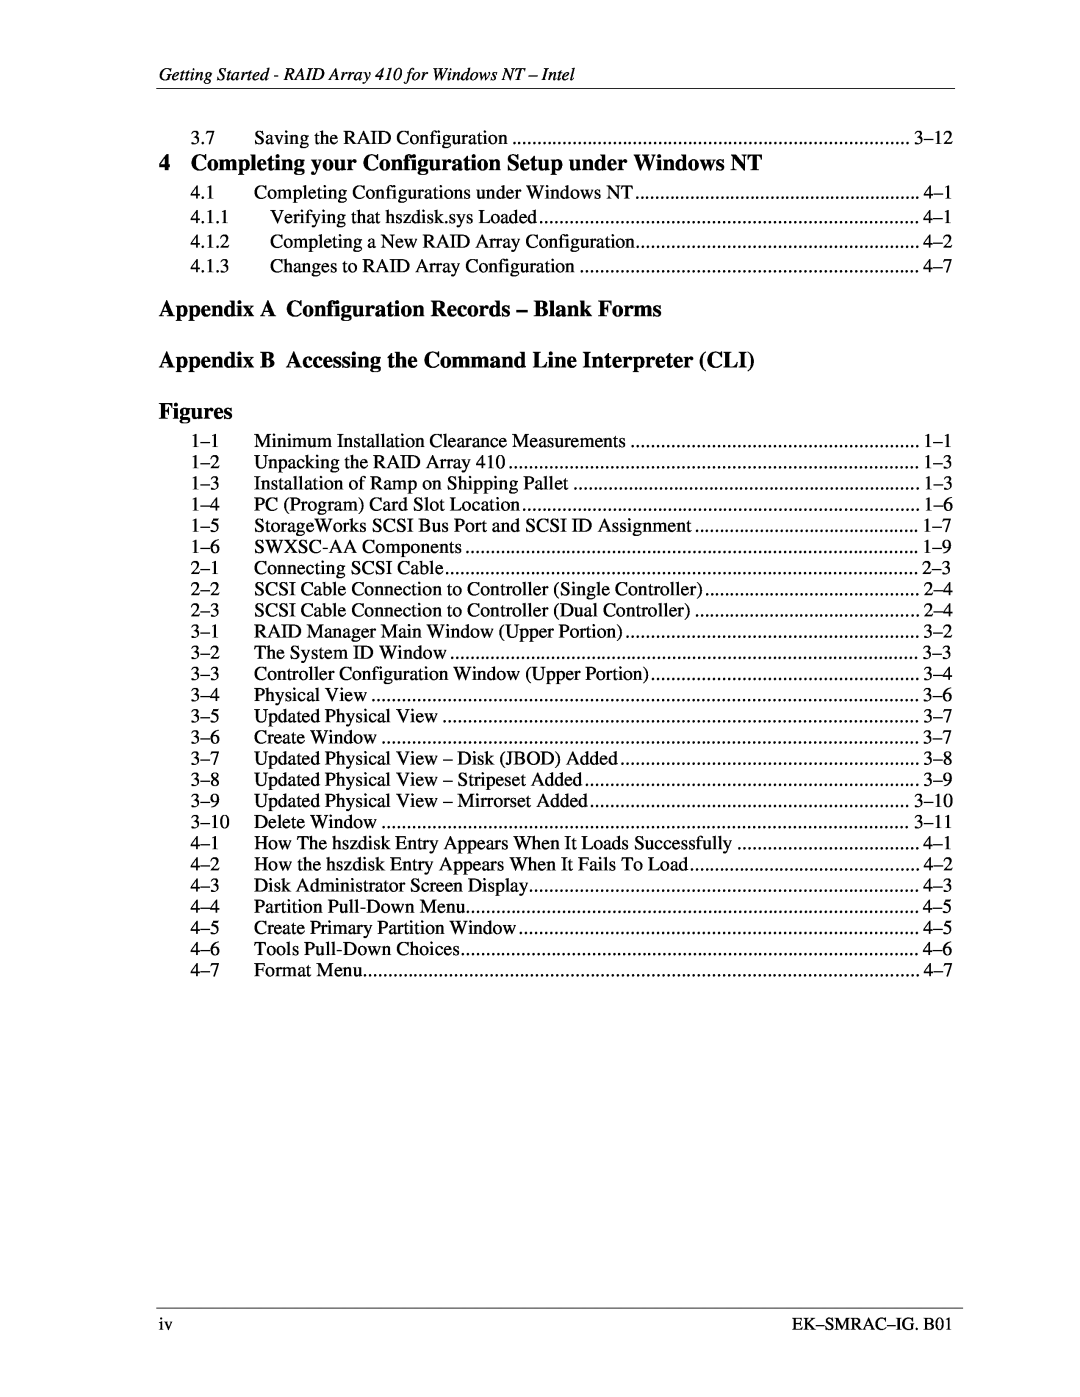 Intel 410 manual Appendix A Configuration Records – Blank Forms, Figures 